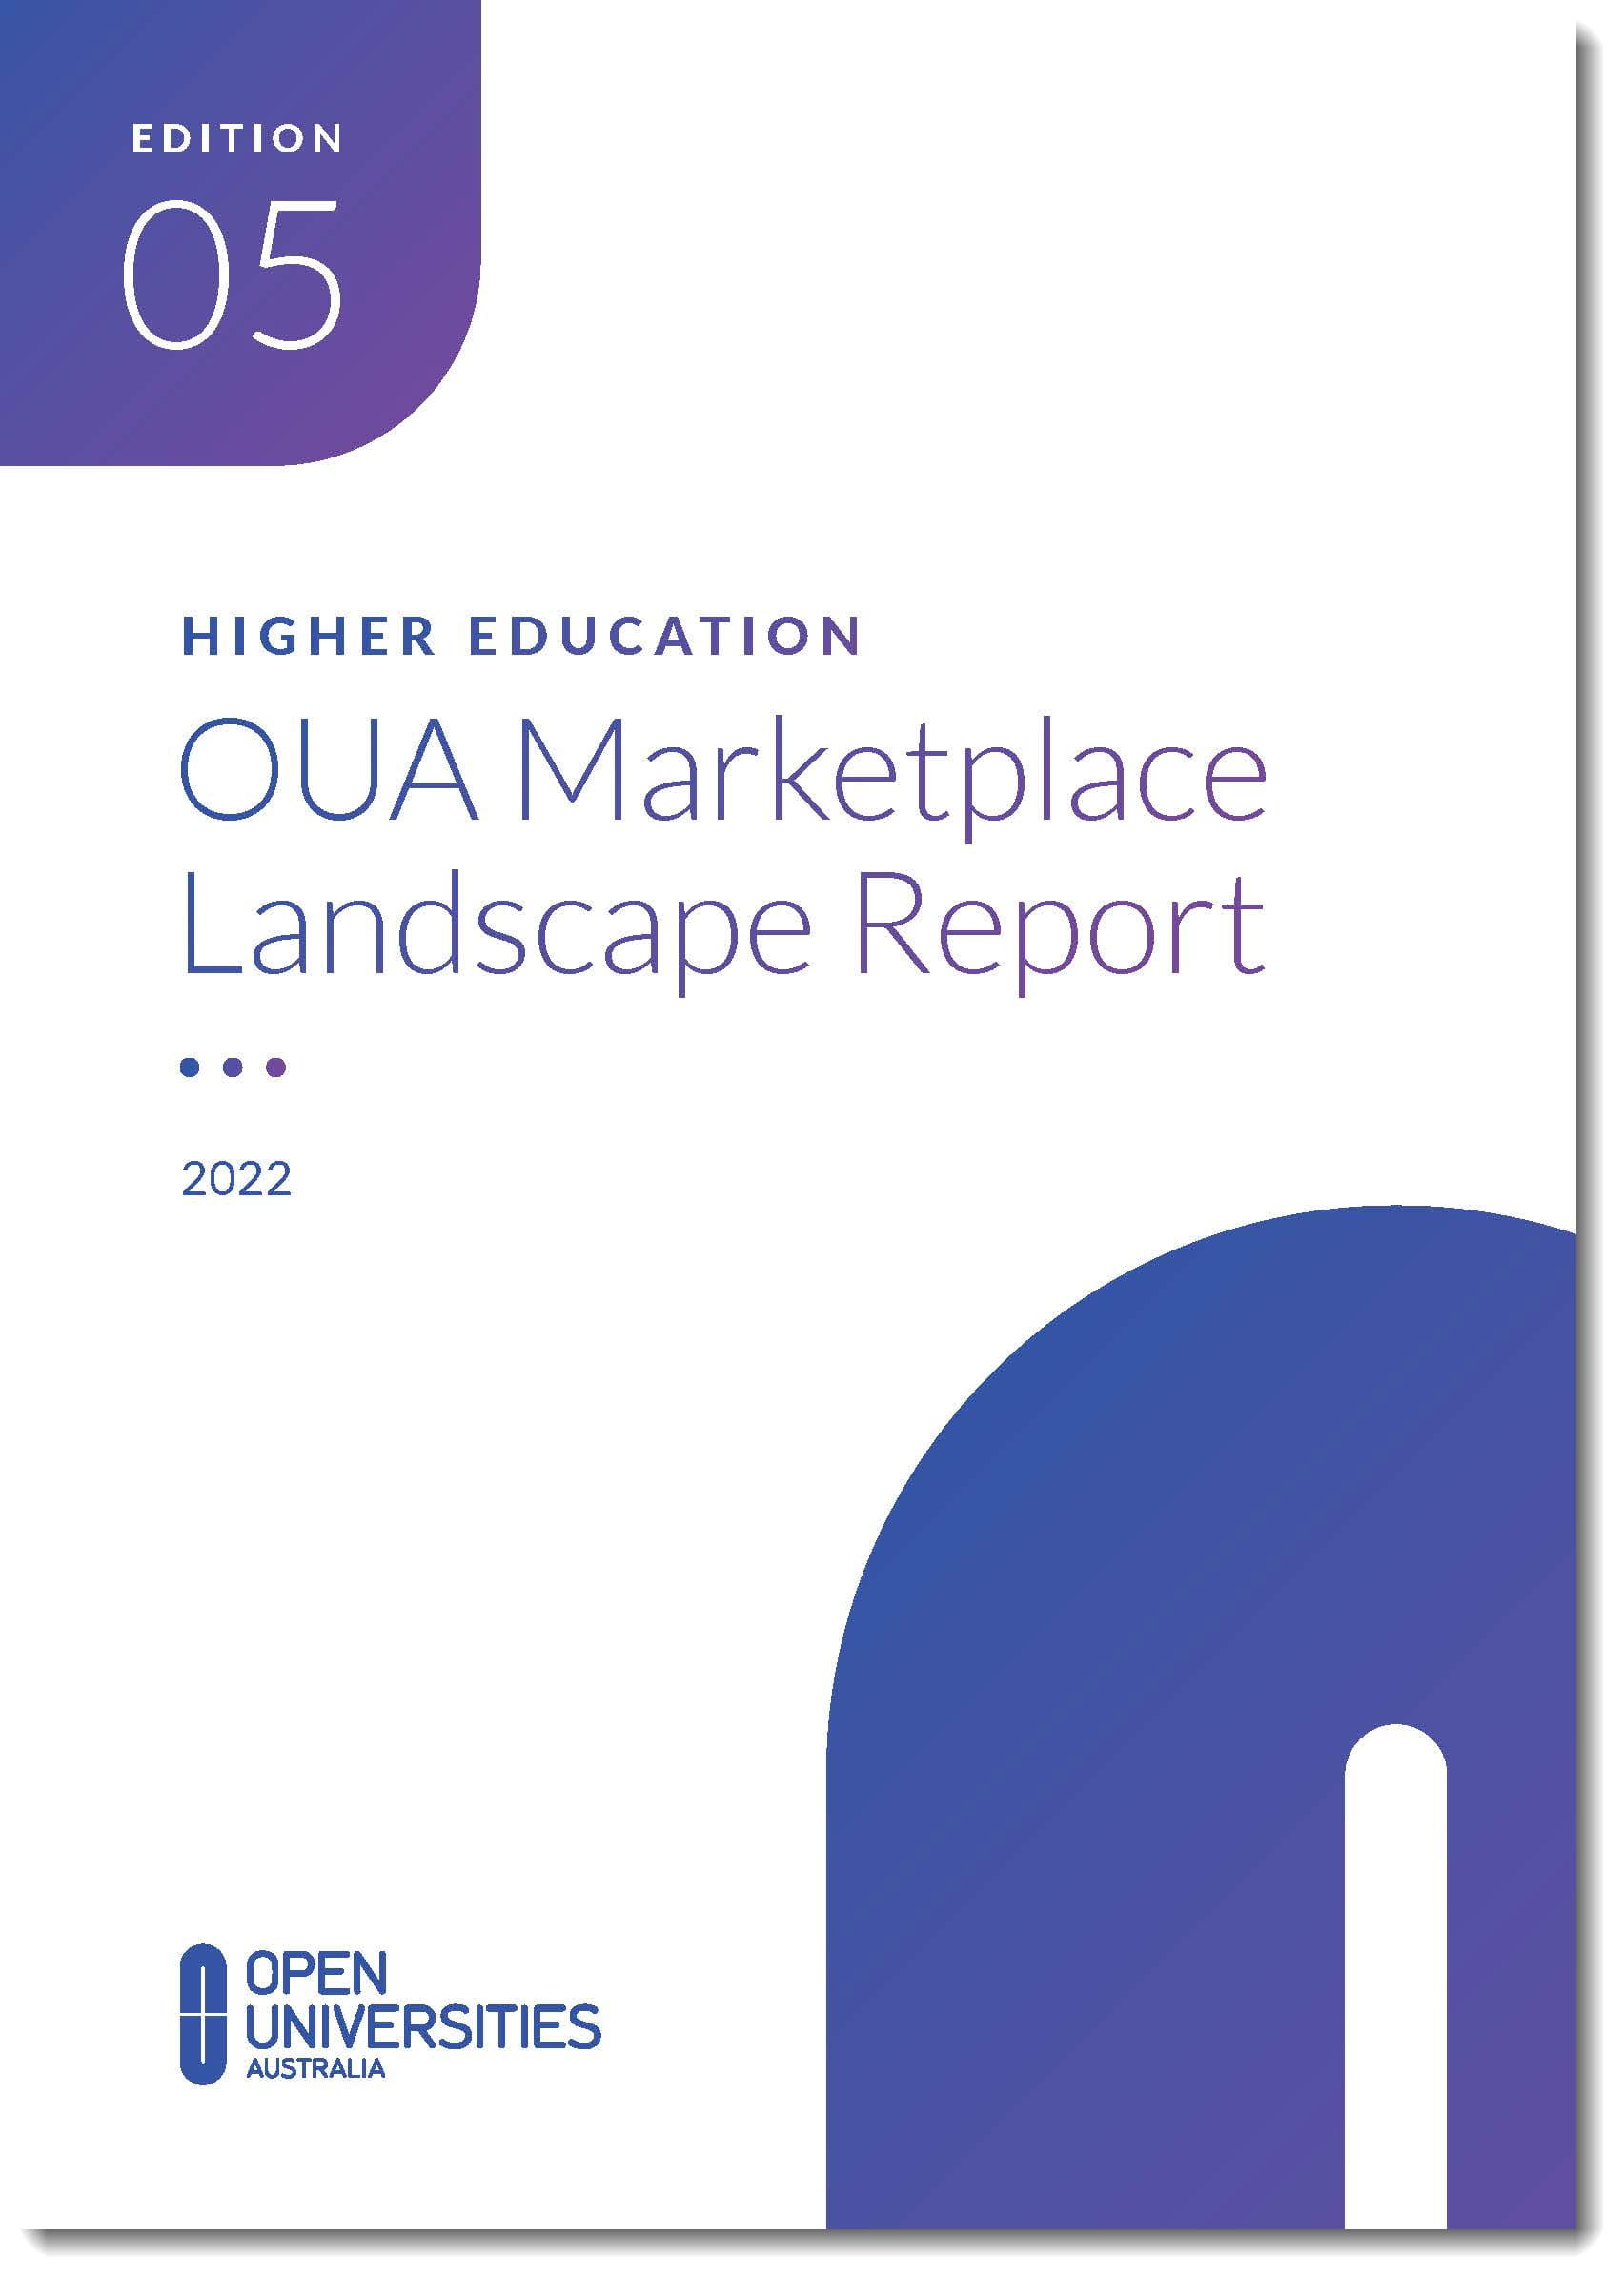 OUA Marketplace Landscape Report 2022